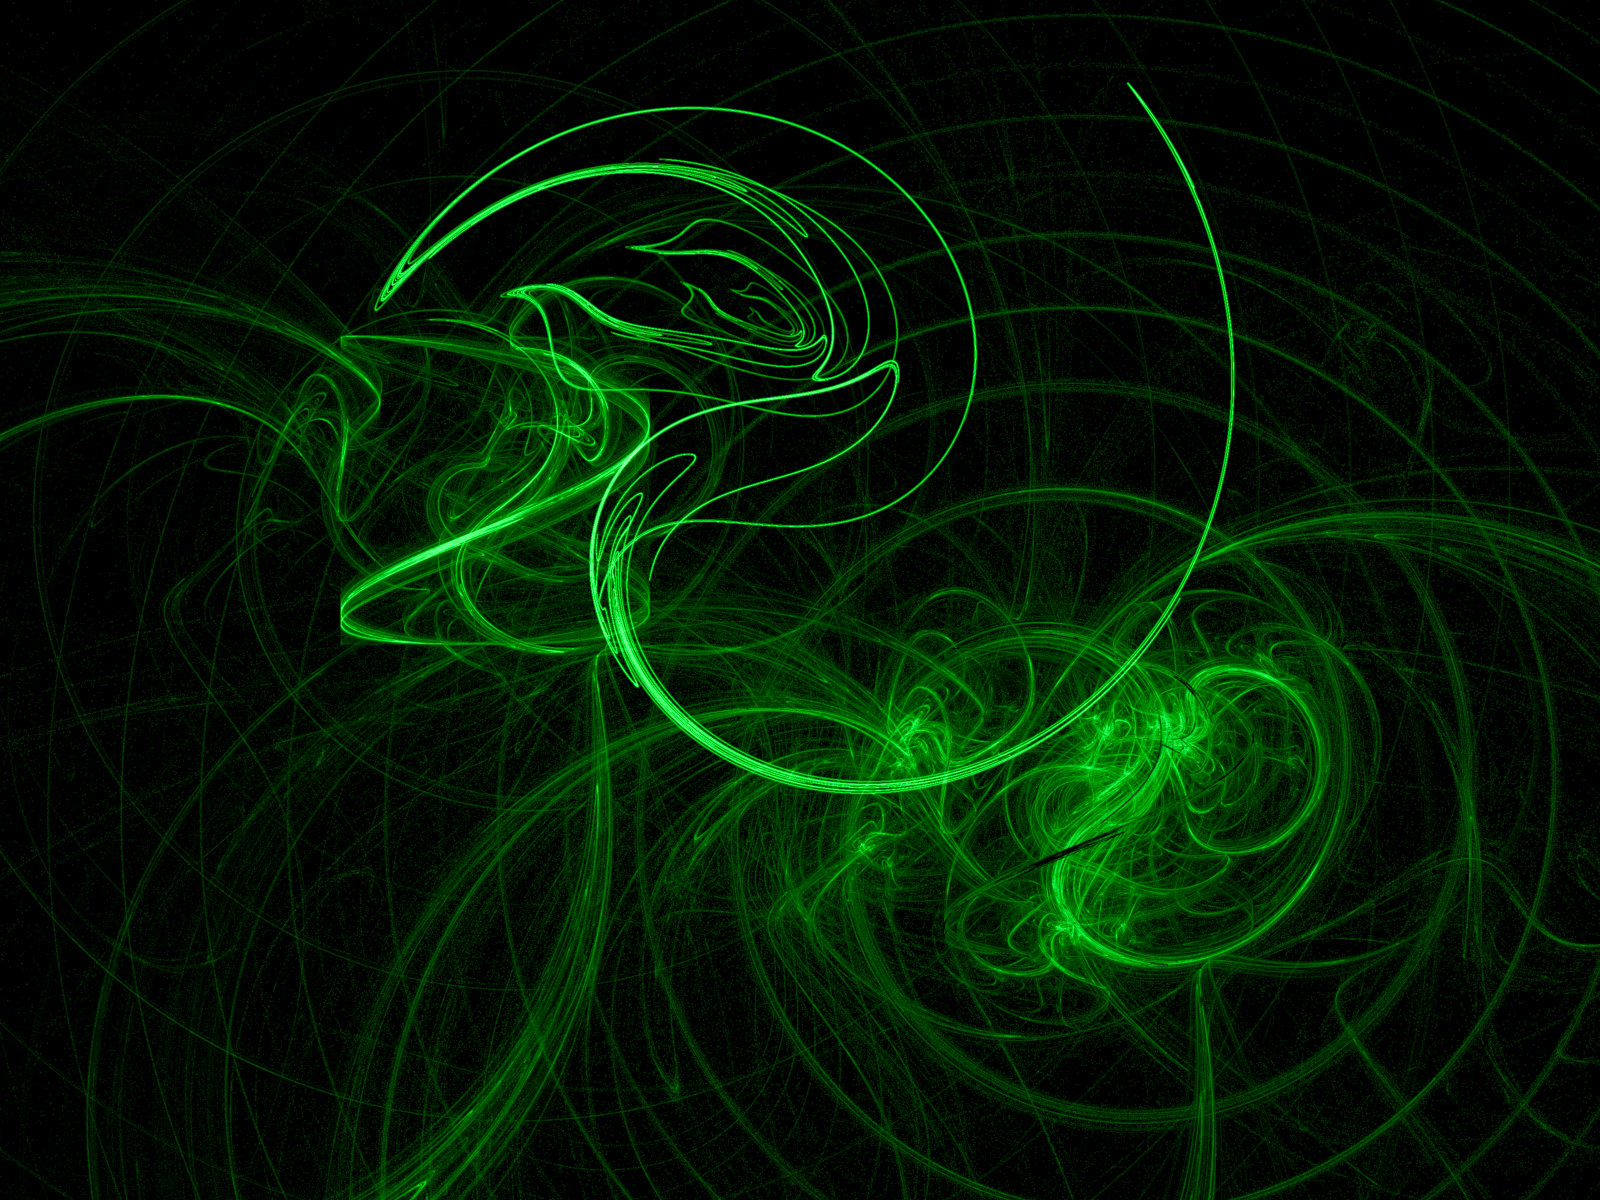 Green Swirls by new001jv on DeviantArt